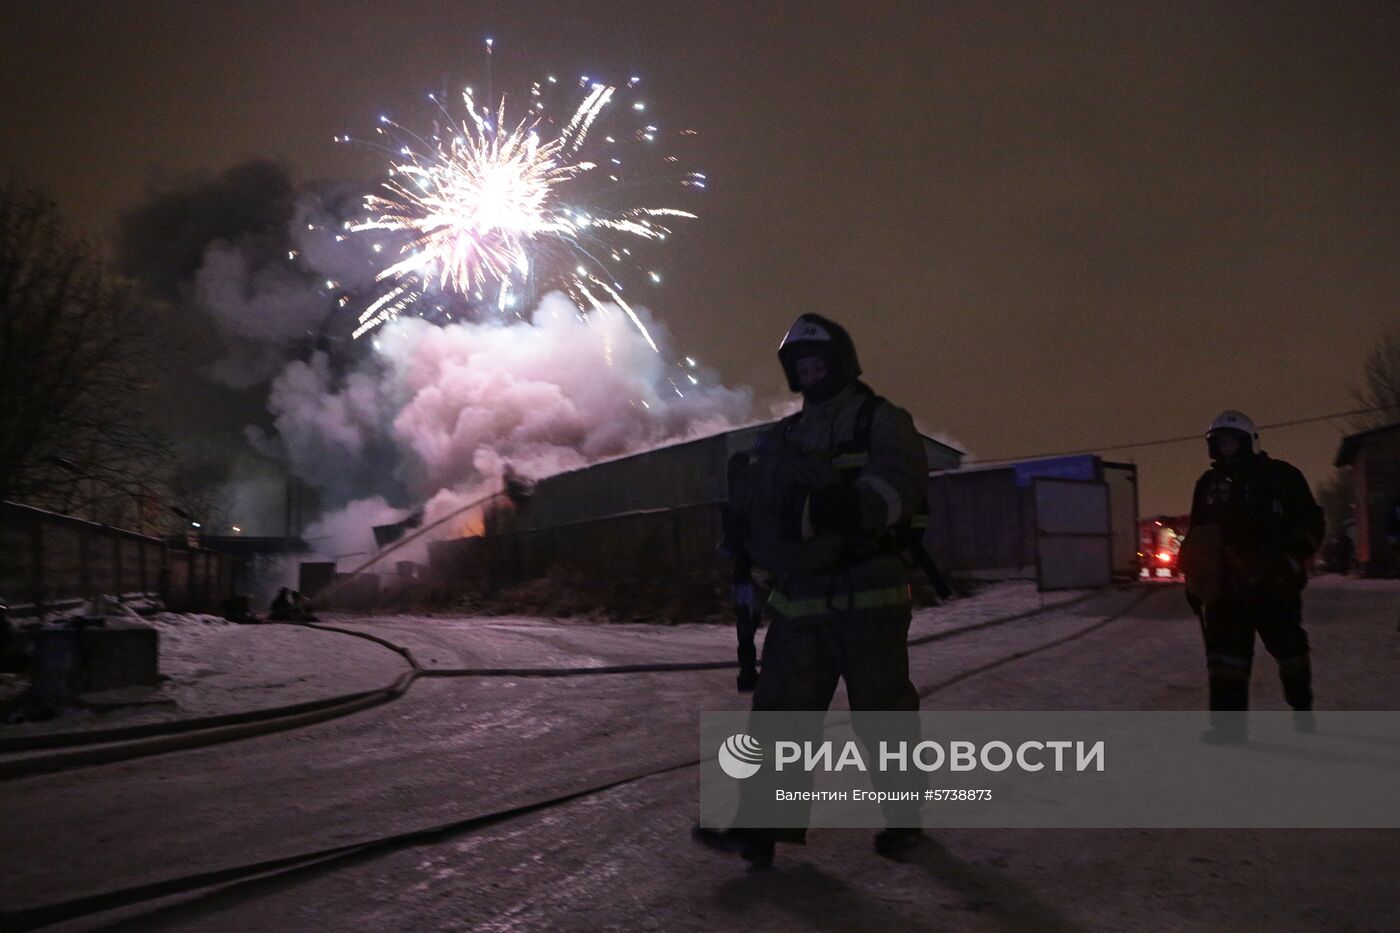 Пожар на складе пиротехники в центре Санкт-Петербурга